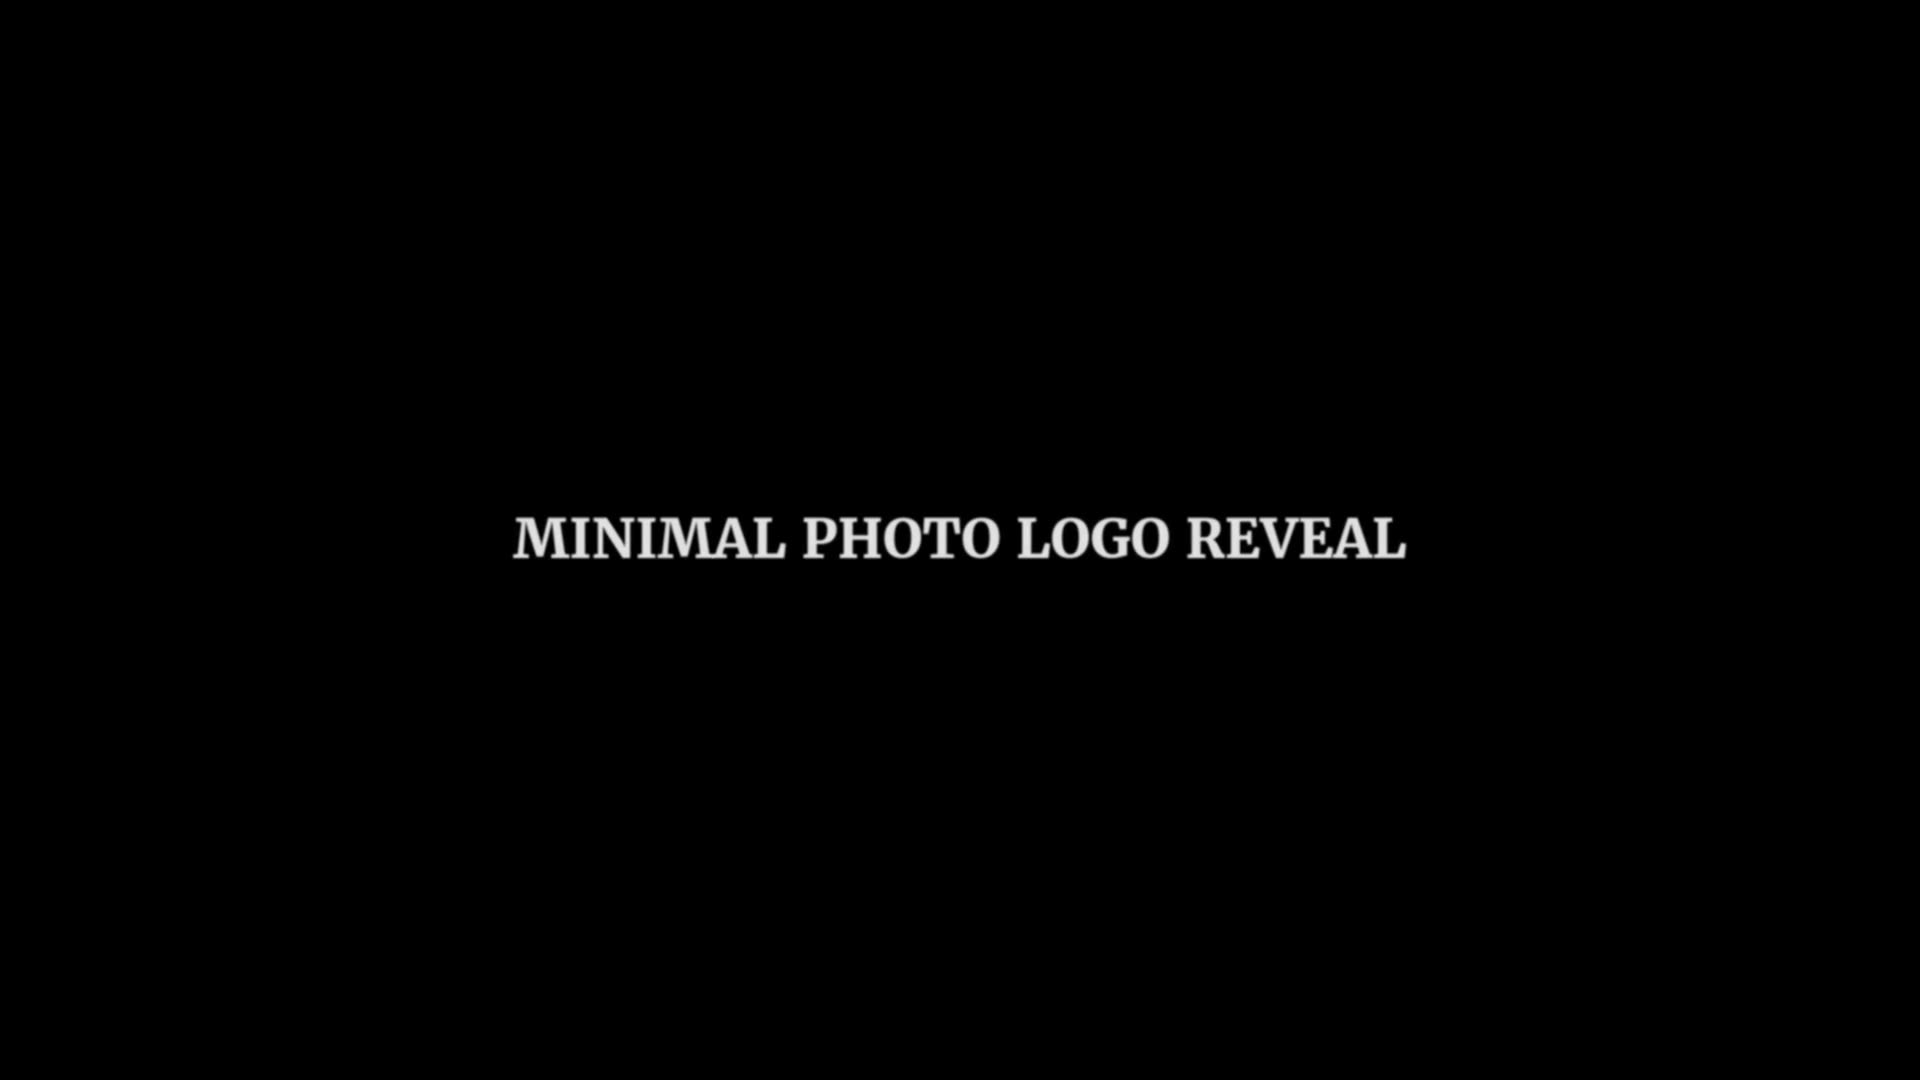 Minimal Photo Logo Reveal | Essential Graphics Videohive 35071336 Premiere Pro Image 2